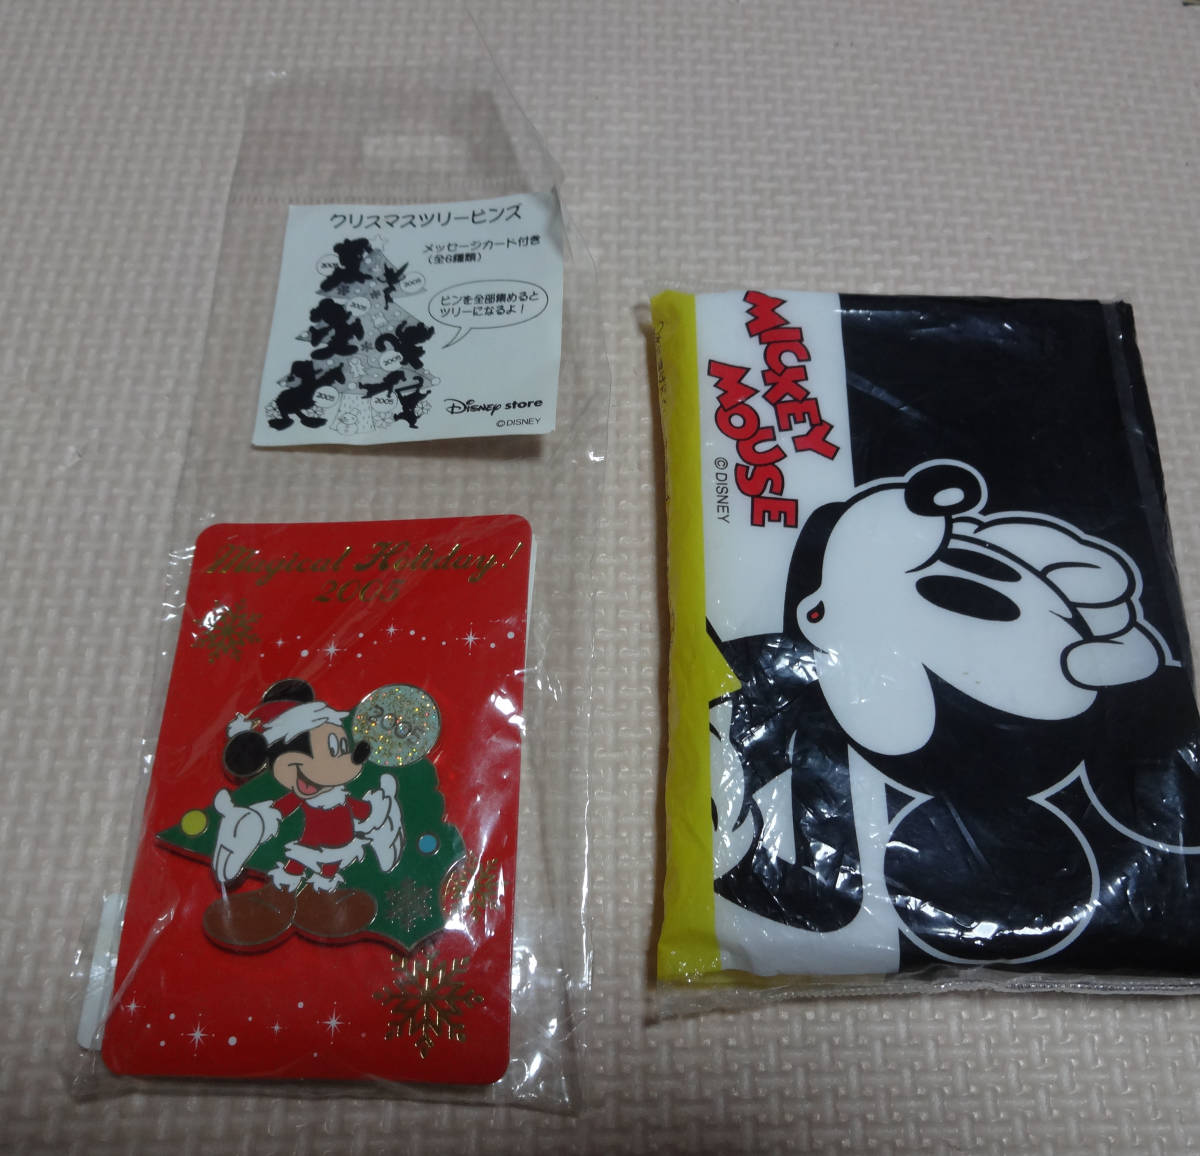  Disney store Mickey 2005 Christmas tree message card attaching retro pin badge pin z pin bachi rare 